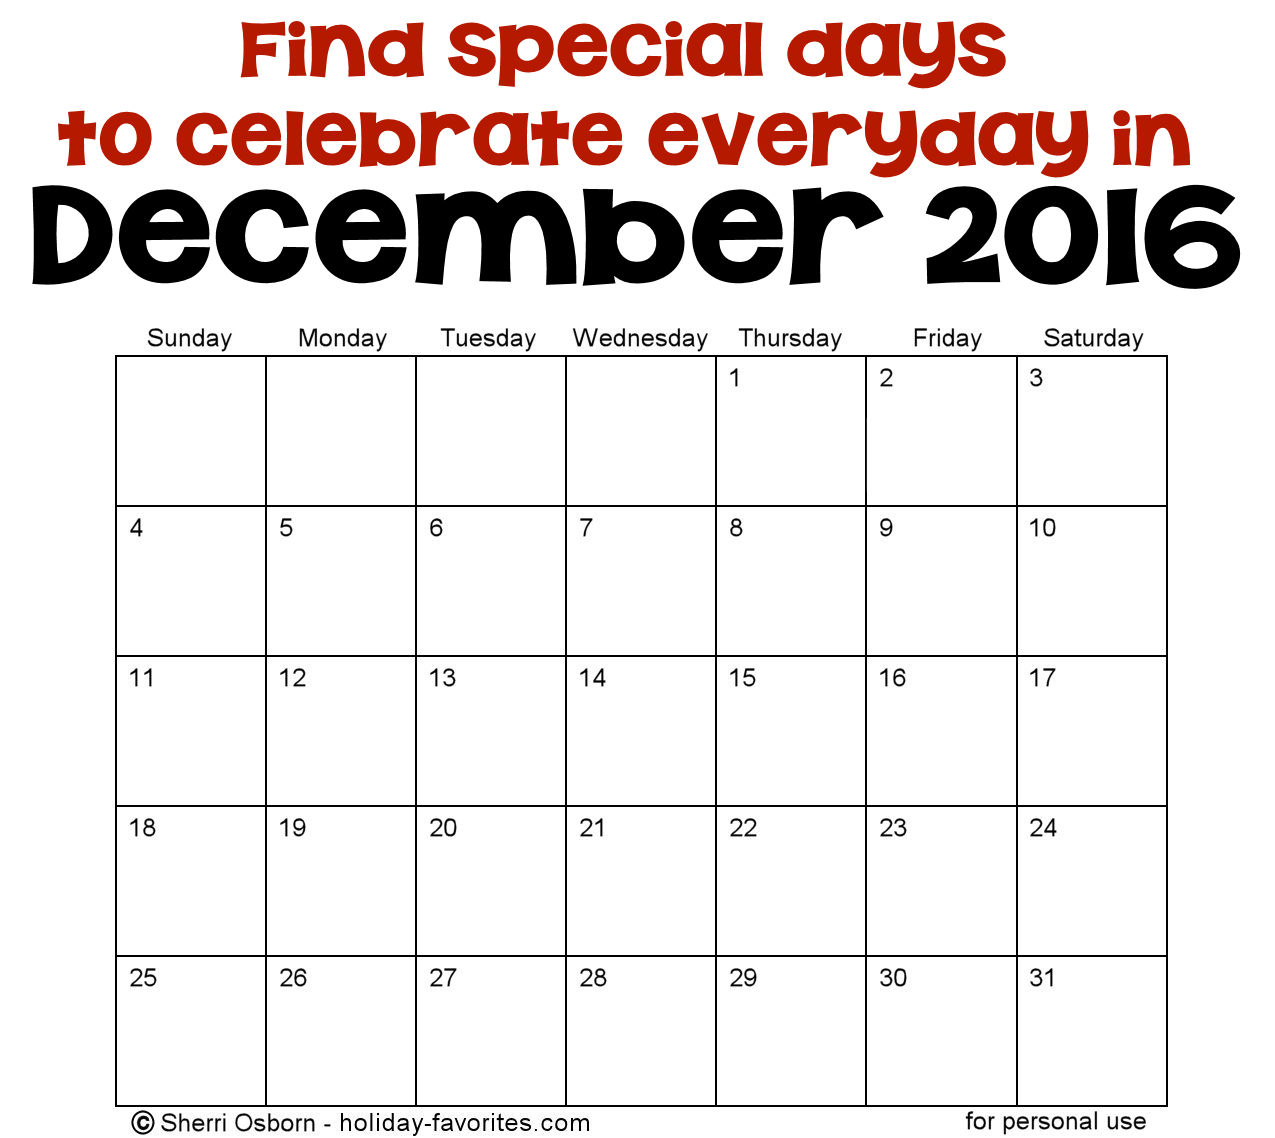 december-holidays-holiday-favorites